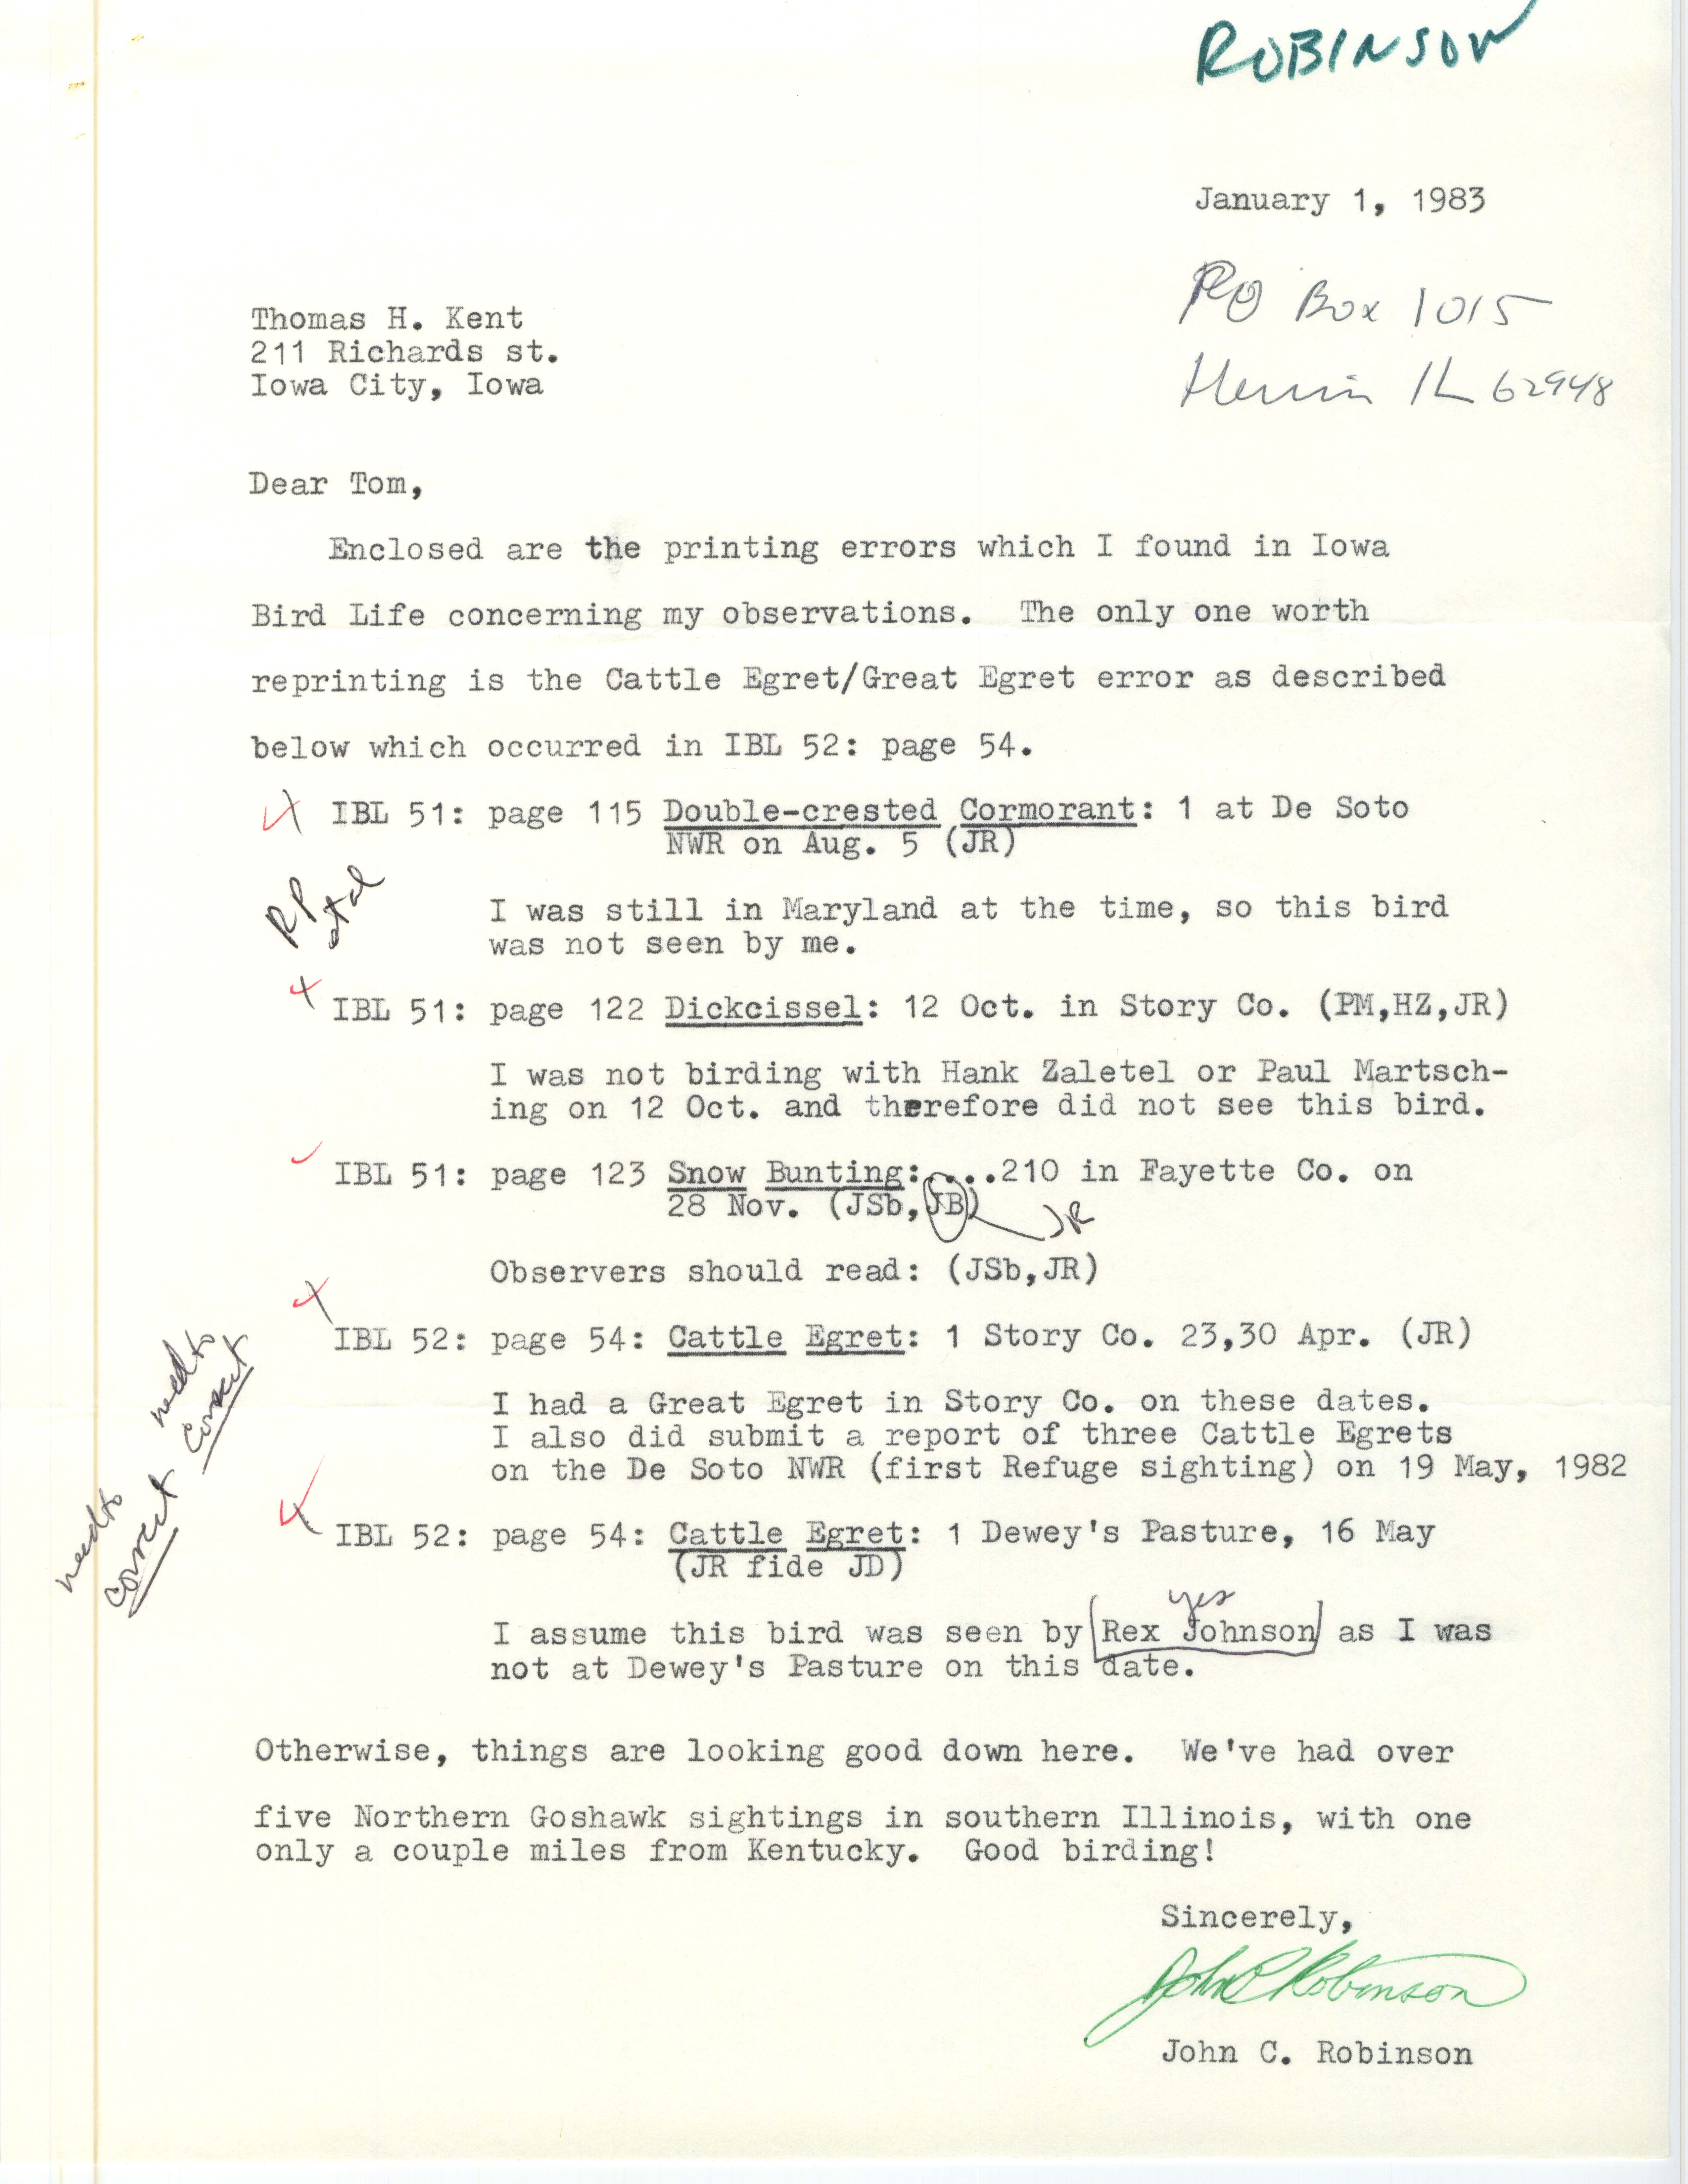 John C. Robinson letter to Thomas H. Kent regarding Iowa Bird Life printing errors with his bird sightings, January 1, 1983